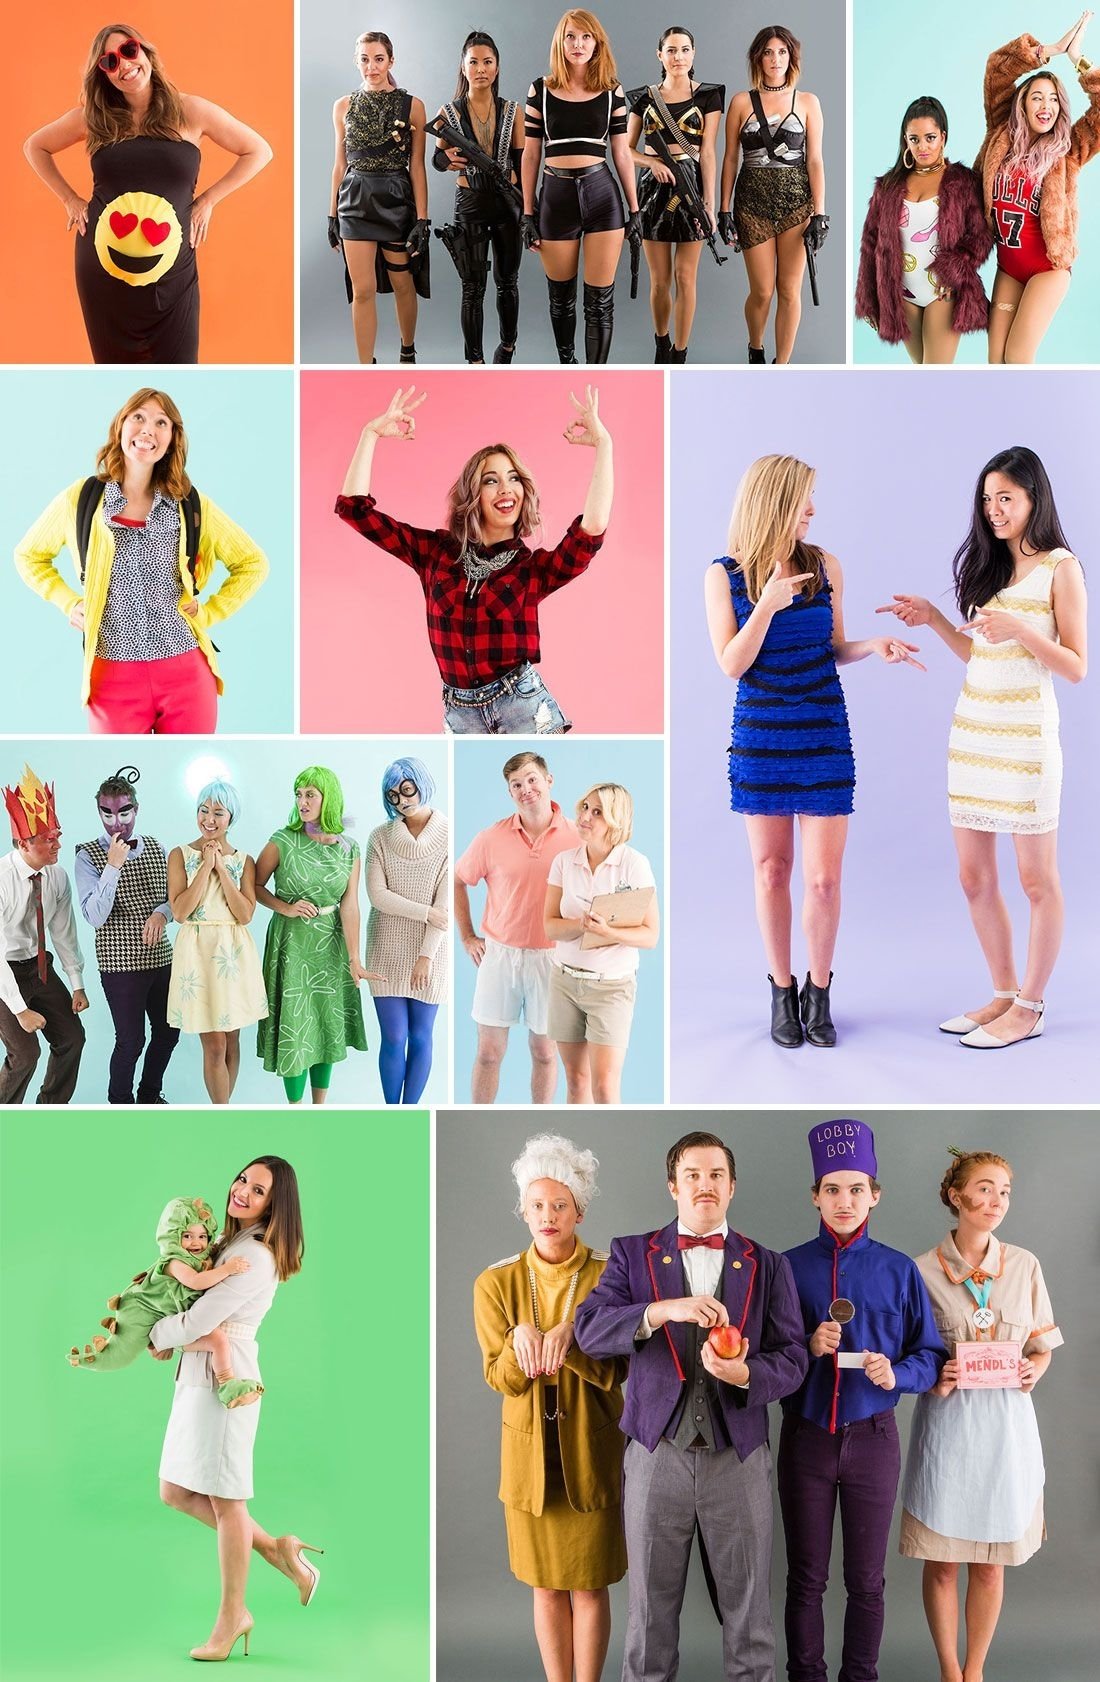 10 Stylish Pop Culture Halloween Costume Ideas 10 diy costumes inspiredpop culture moments of 2015 diy 2022